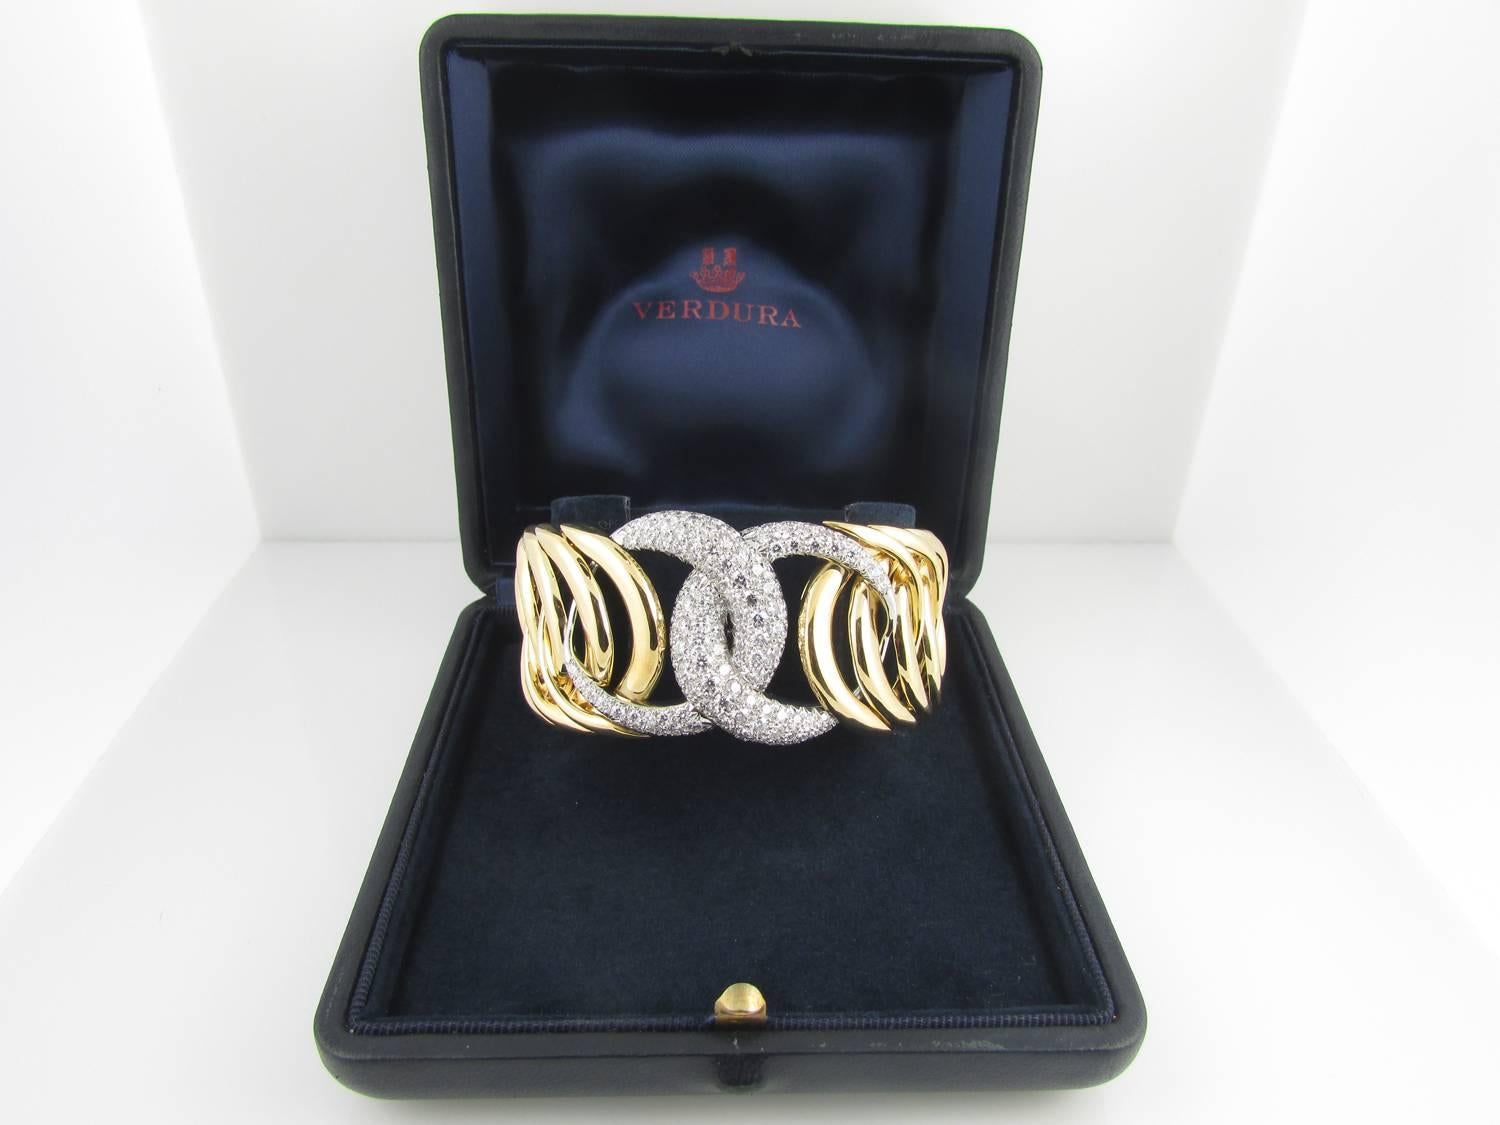 Verdura Double Crescent Gold and Diamond Bracelet 5